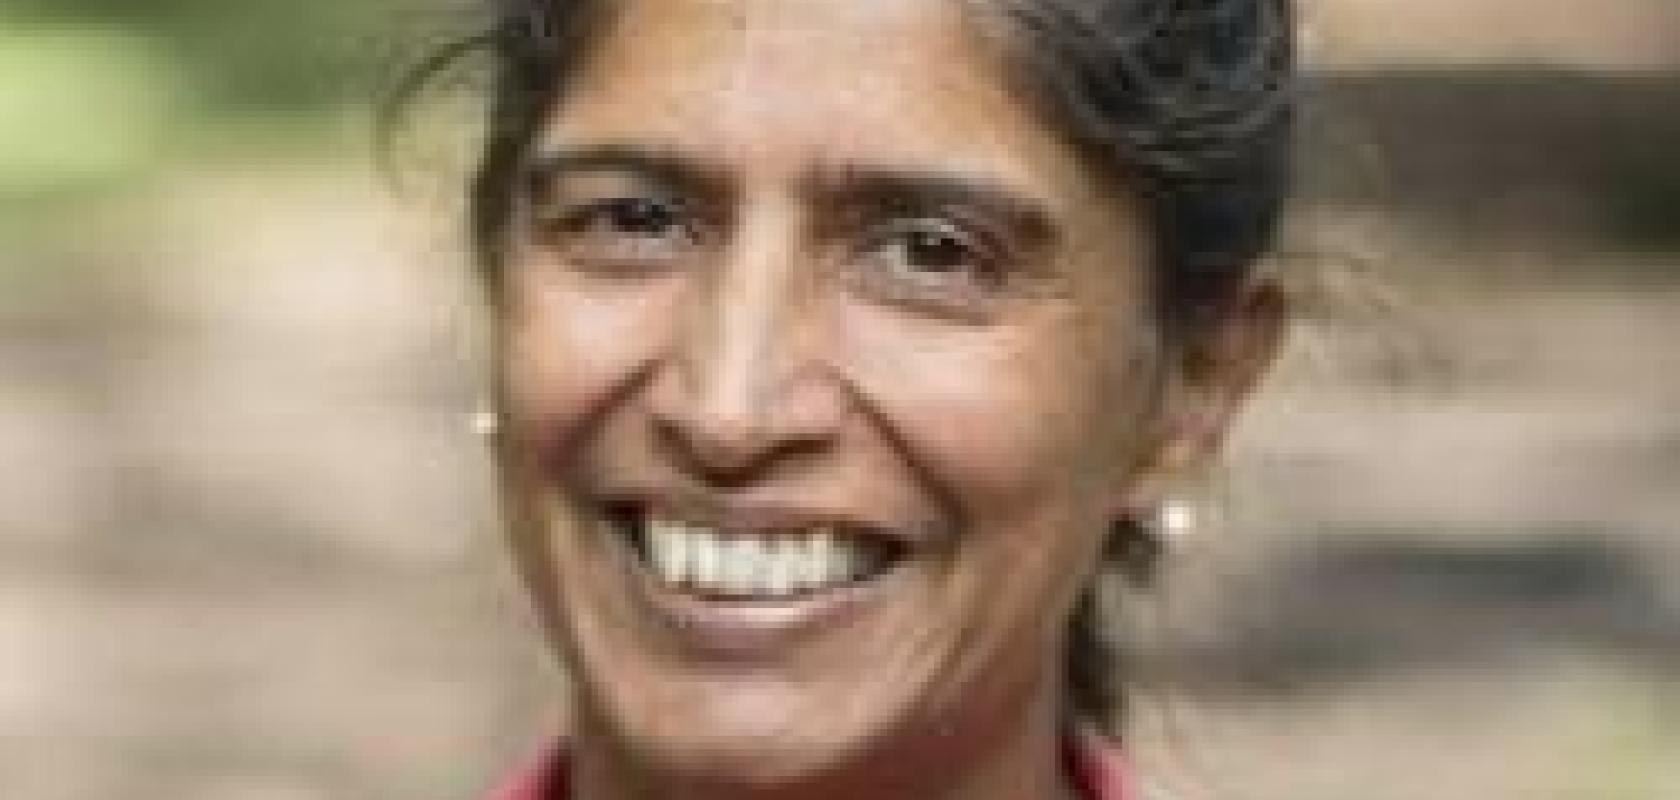 Anita Mahadevan-Jansen, Director, Vanderbilt Biophotonics Center, Vanderbilt University